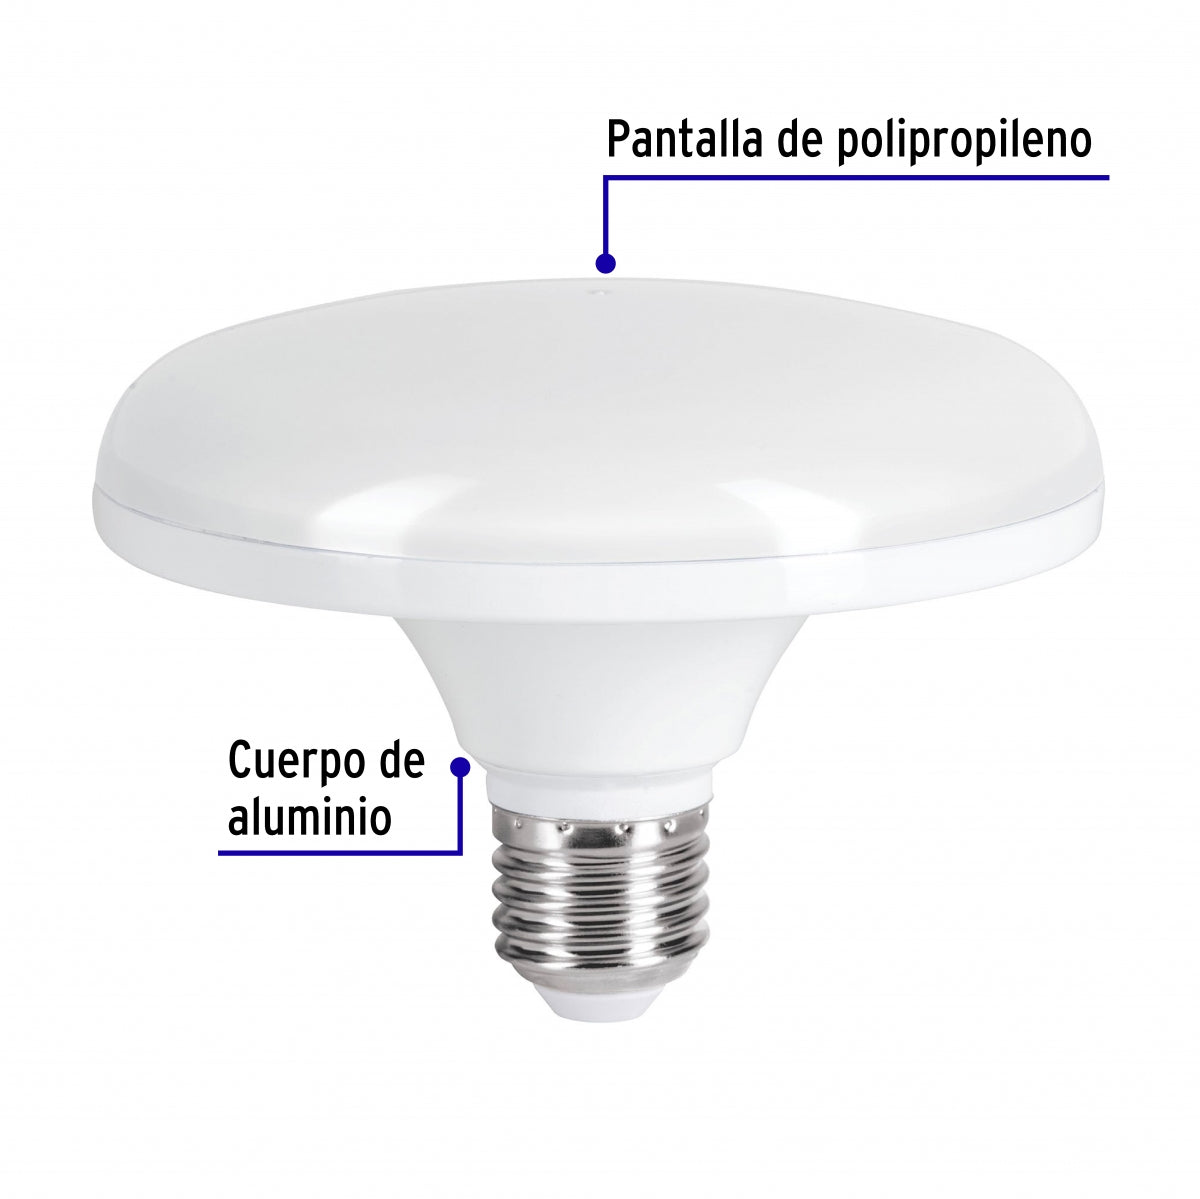 Foco LED tipo OVNI 12W (equivalente 75W) luz cálida SKU:'45630